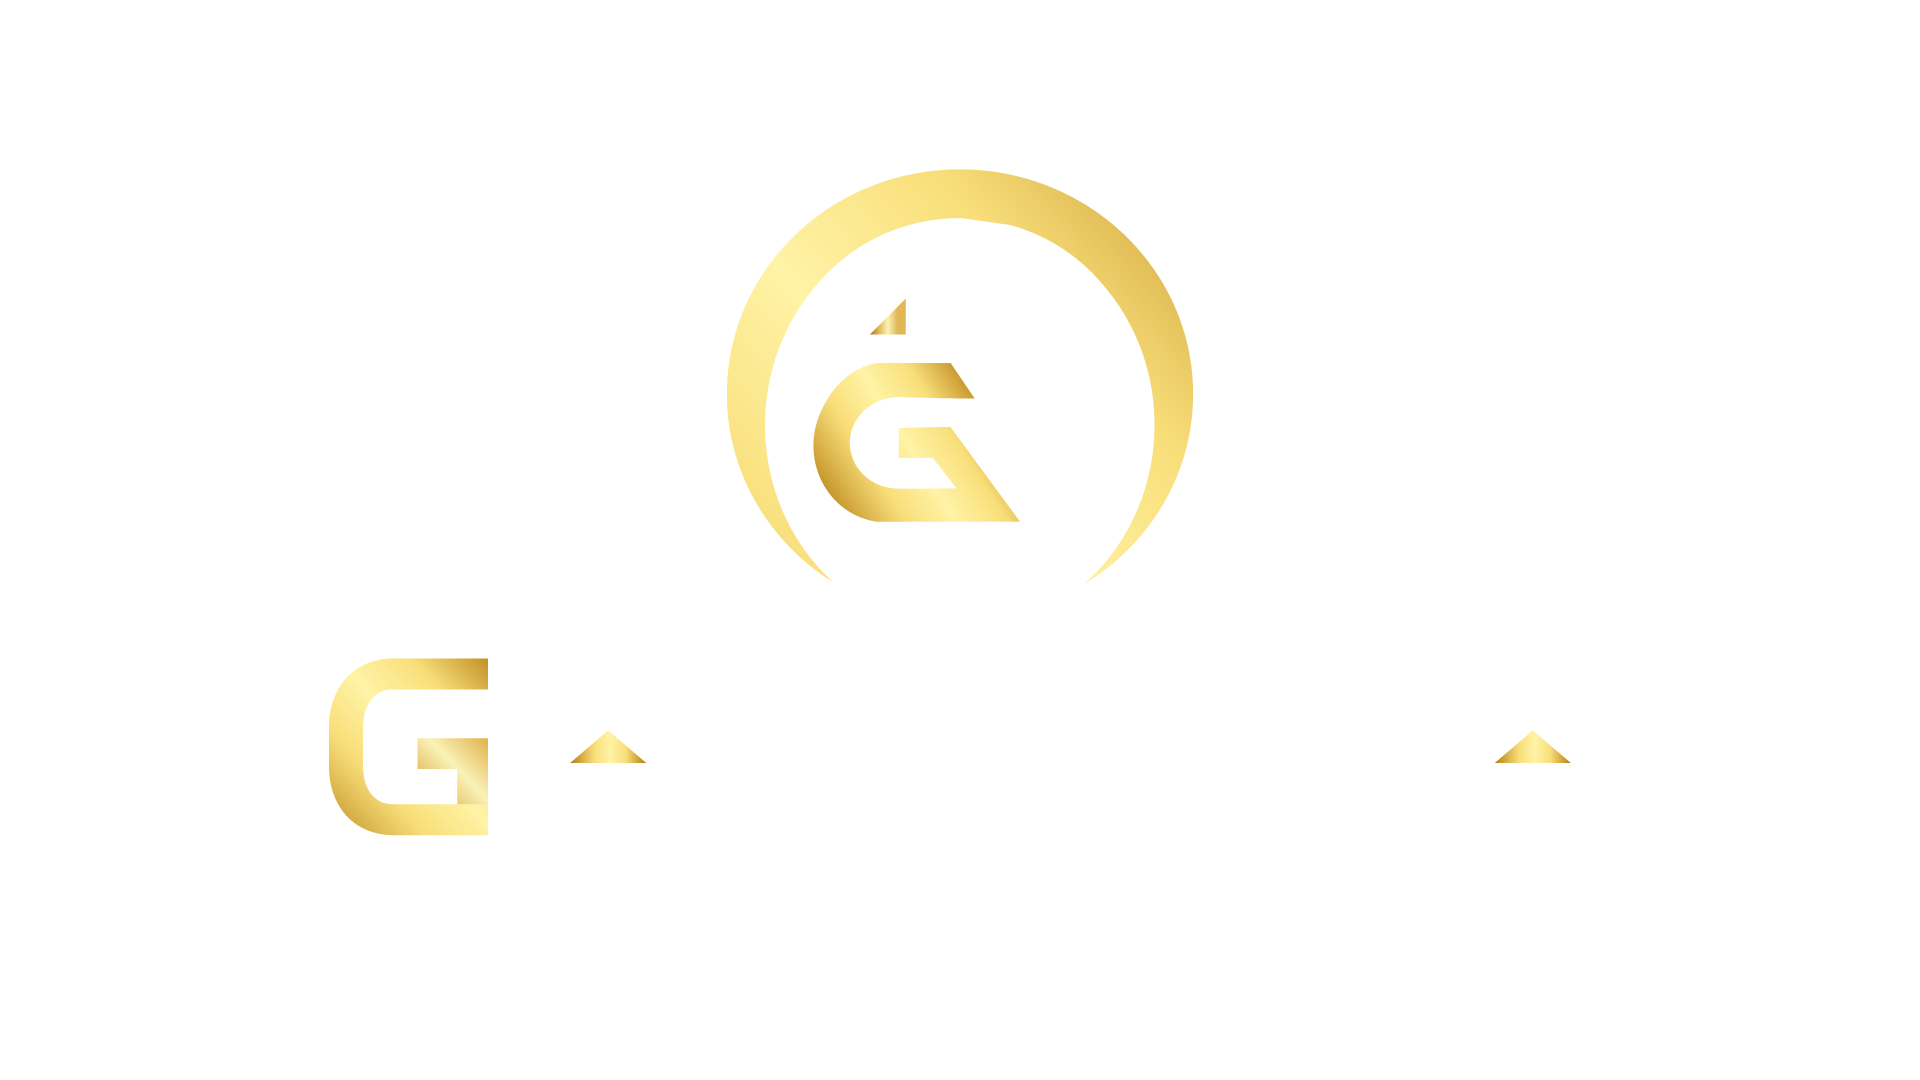 Getraise Technologies logo